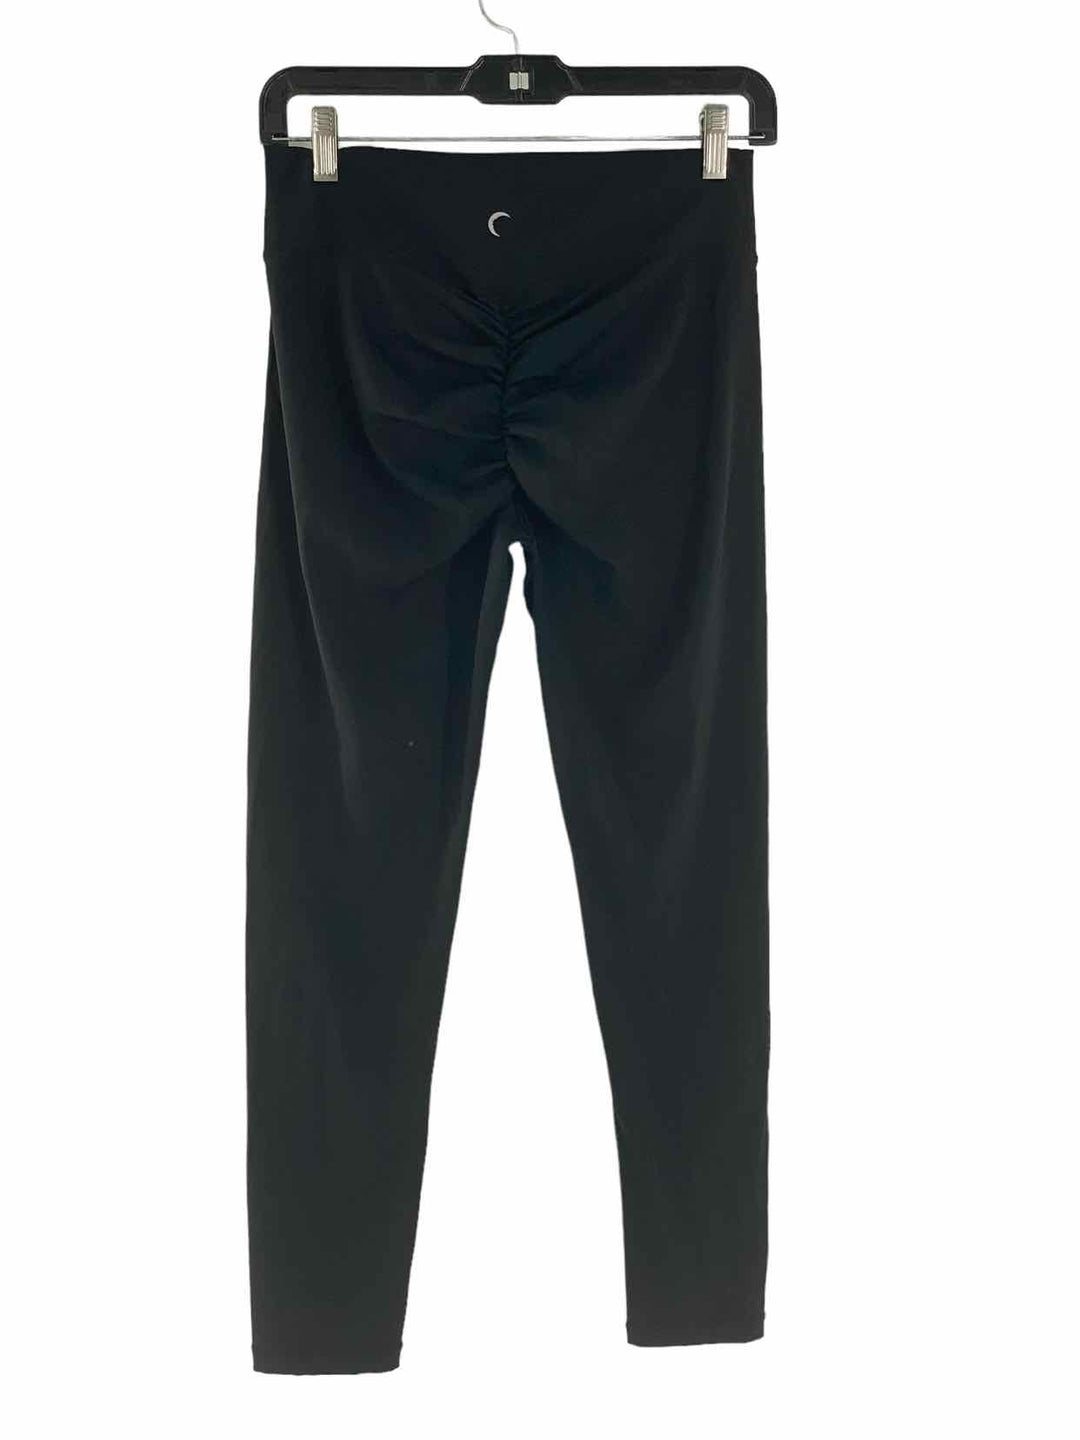 Zyia Size 12 Black Athletic Pants